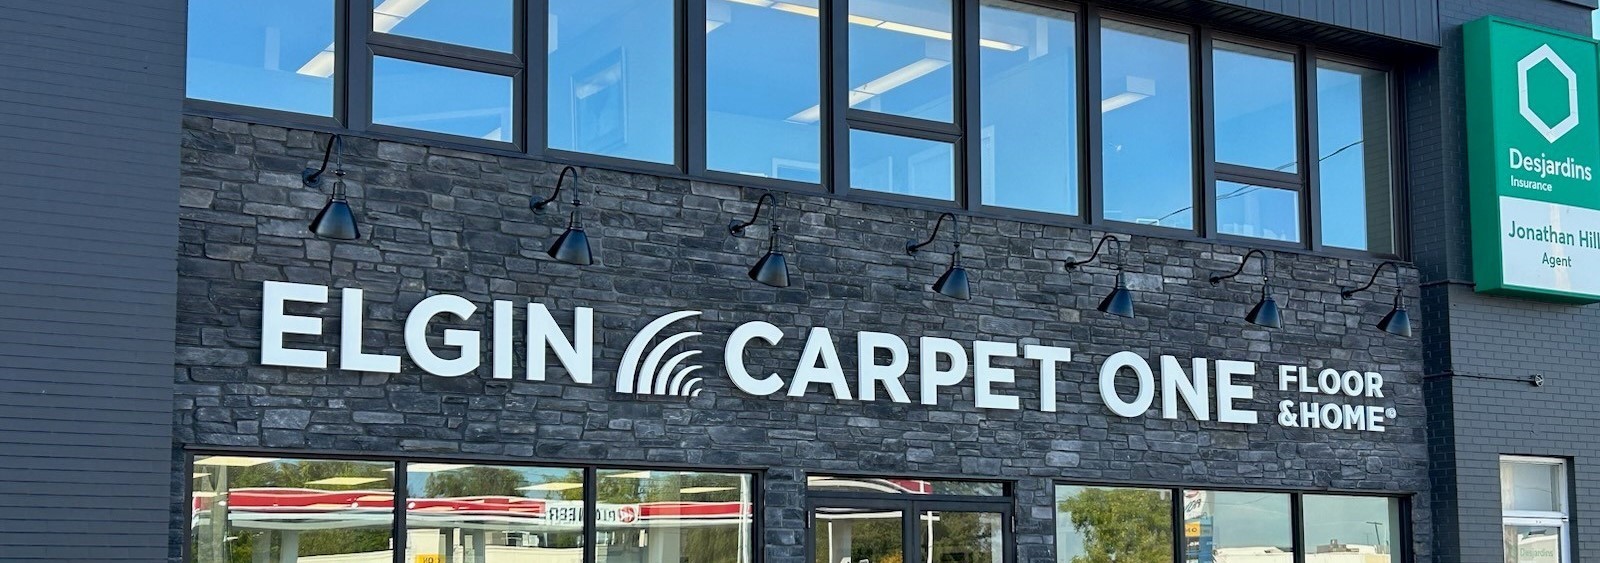 Elgin Carpet One Storefront